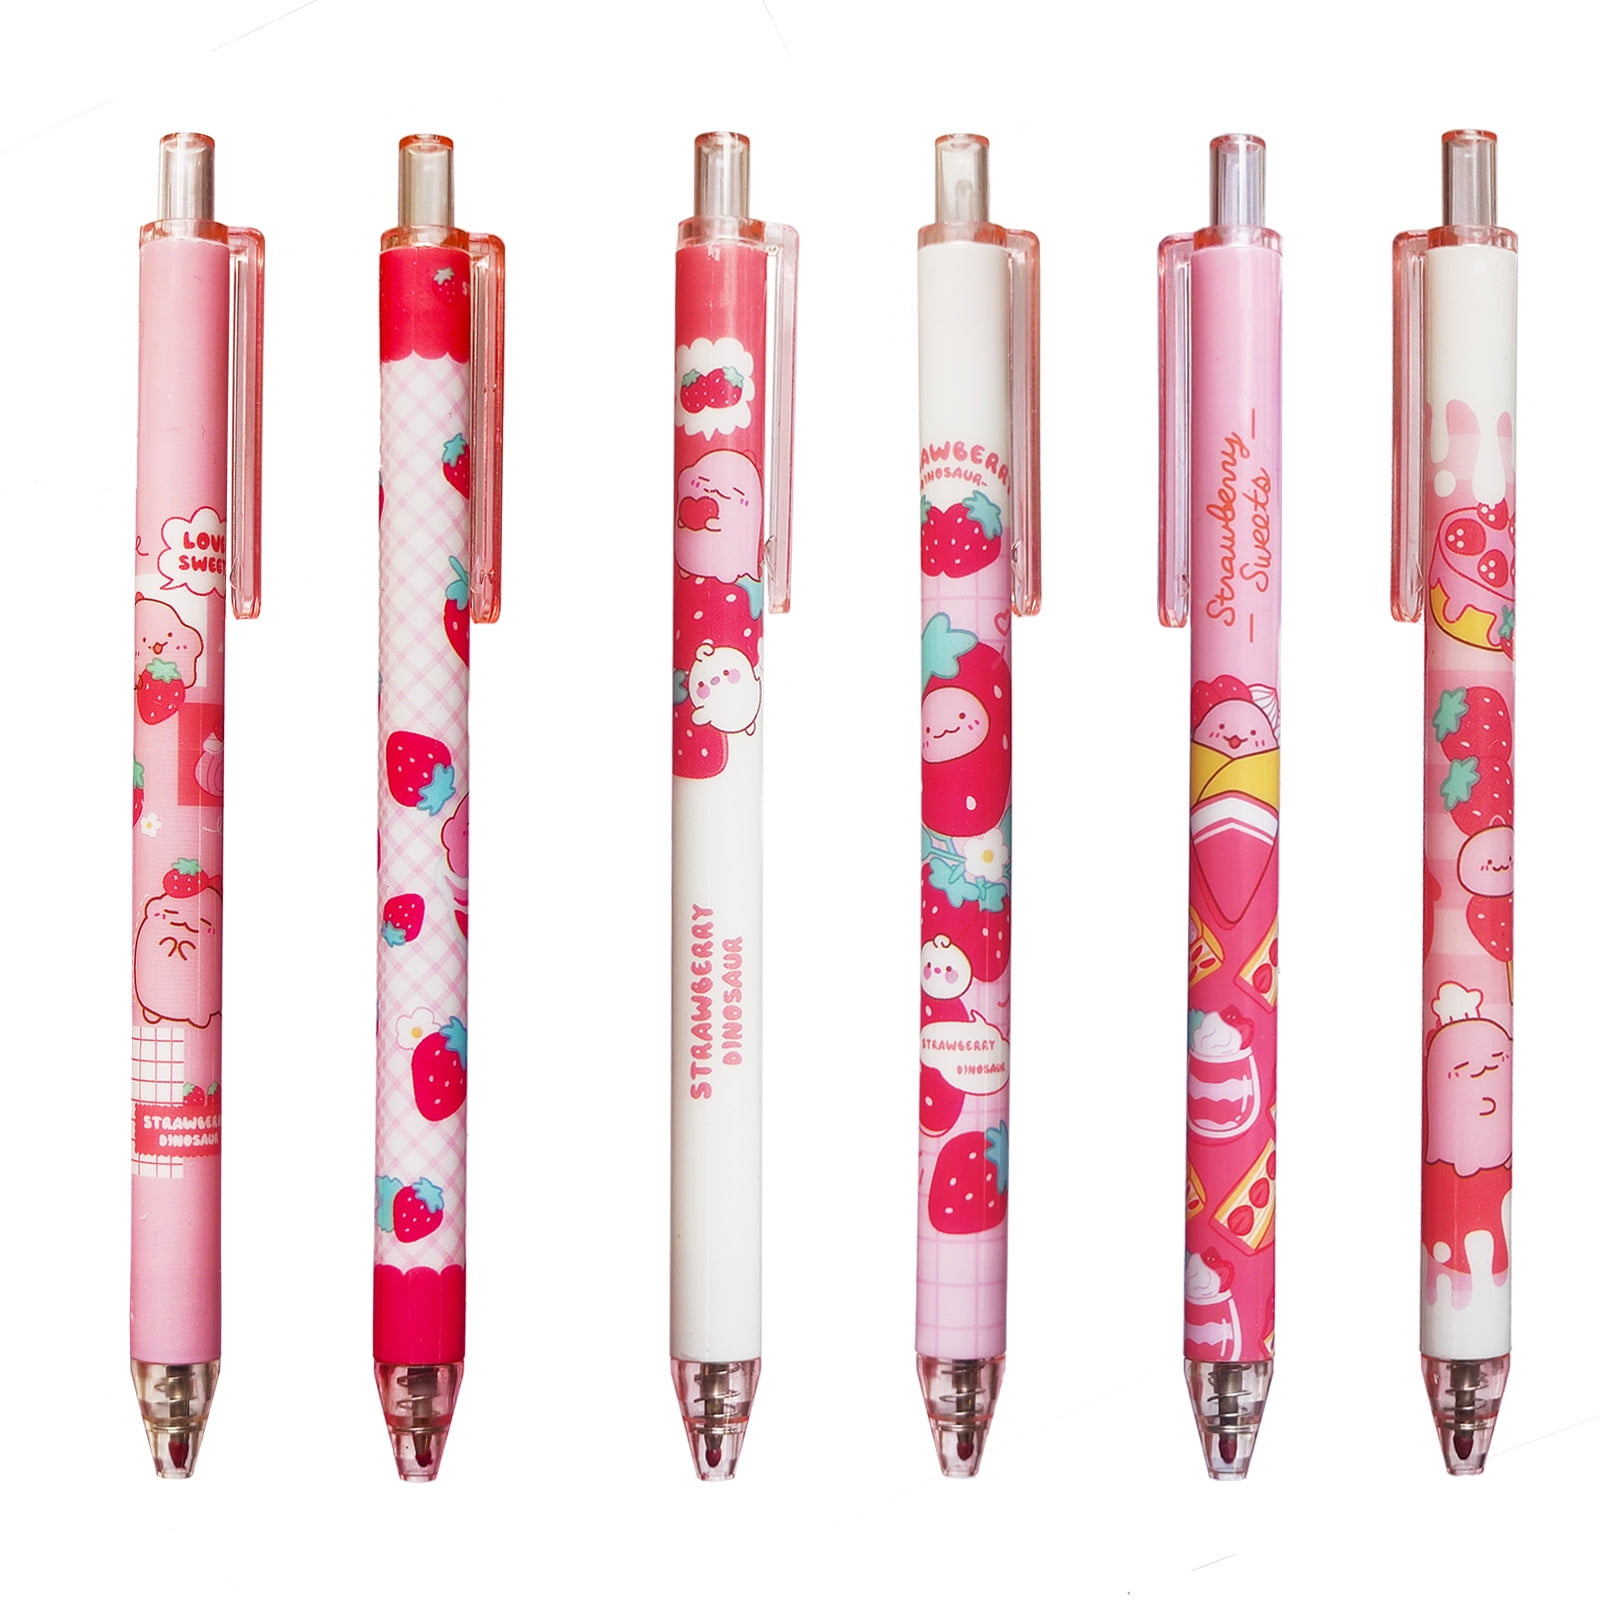  DIBALIYI 12 PCS Owl Ballpoint Pens, 4-in-1 Retractable gel  pens, Cute Mini Cartoon Pens For kids Women Adults Teens, Multicolor Pens  for Office School Home Supplies, Fun Pens for Birthday